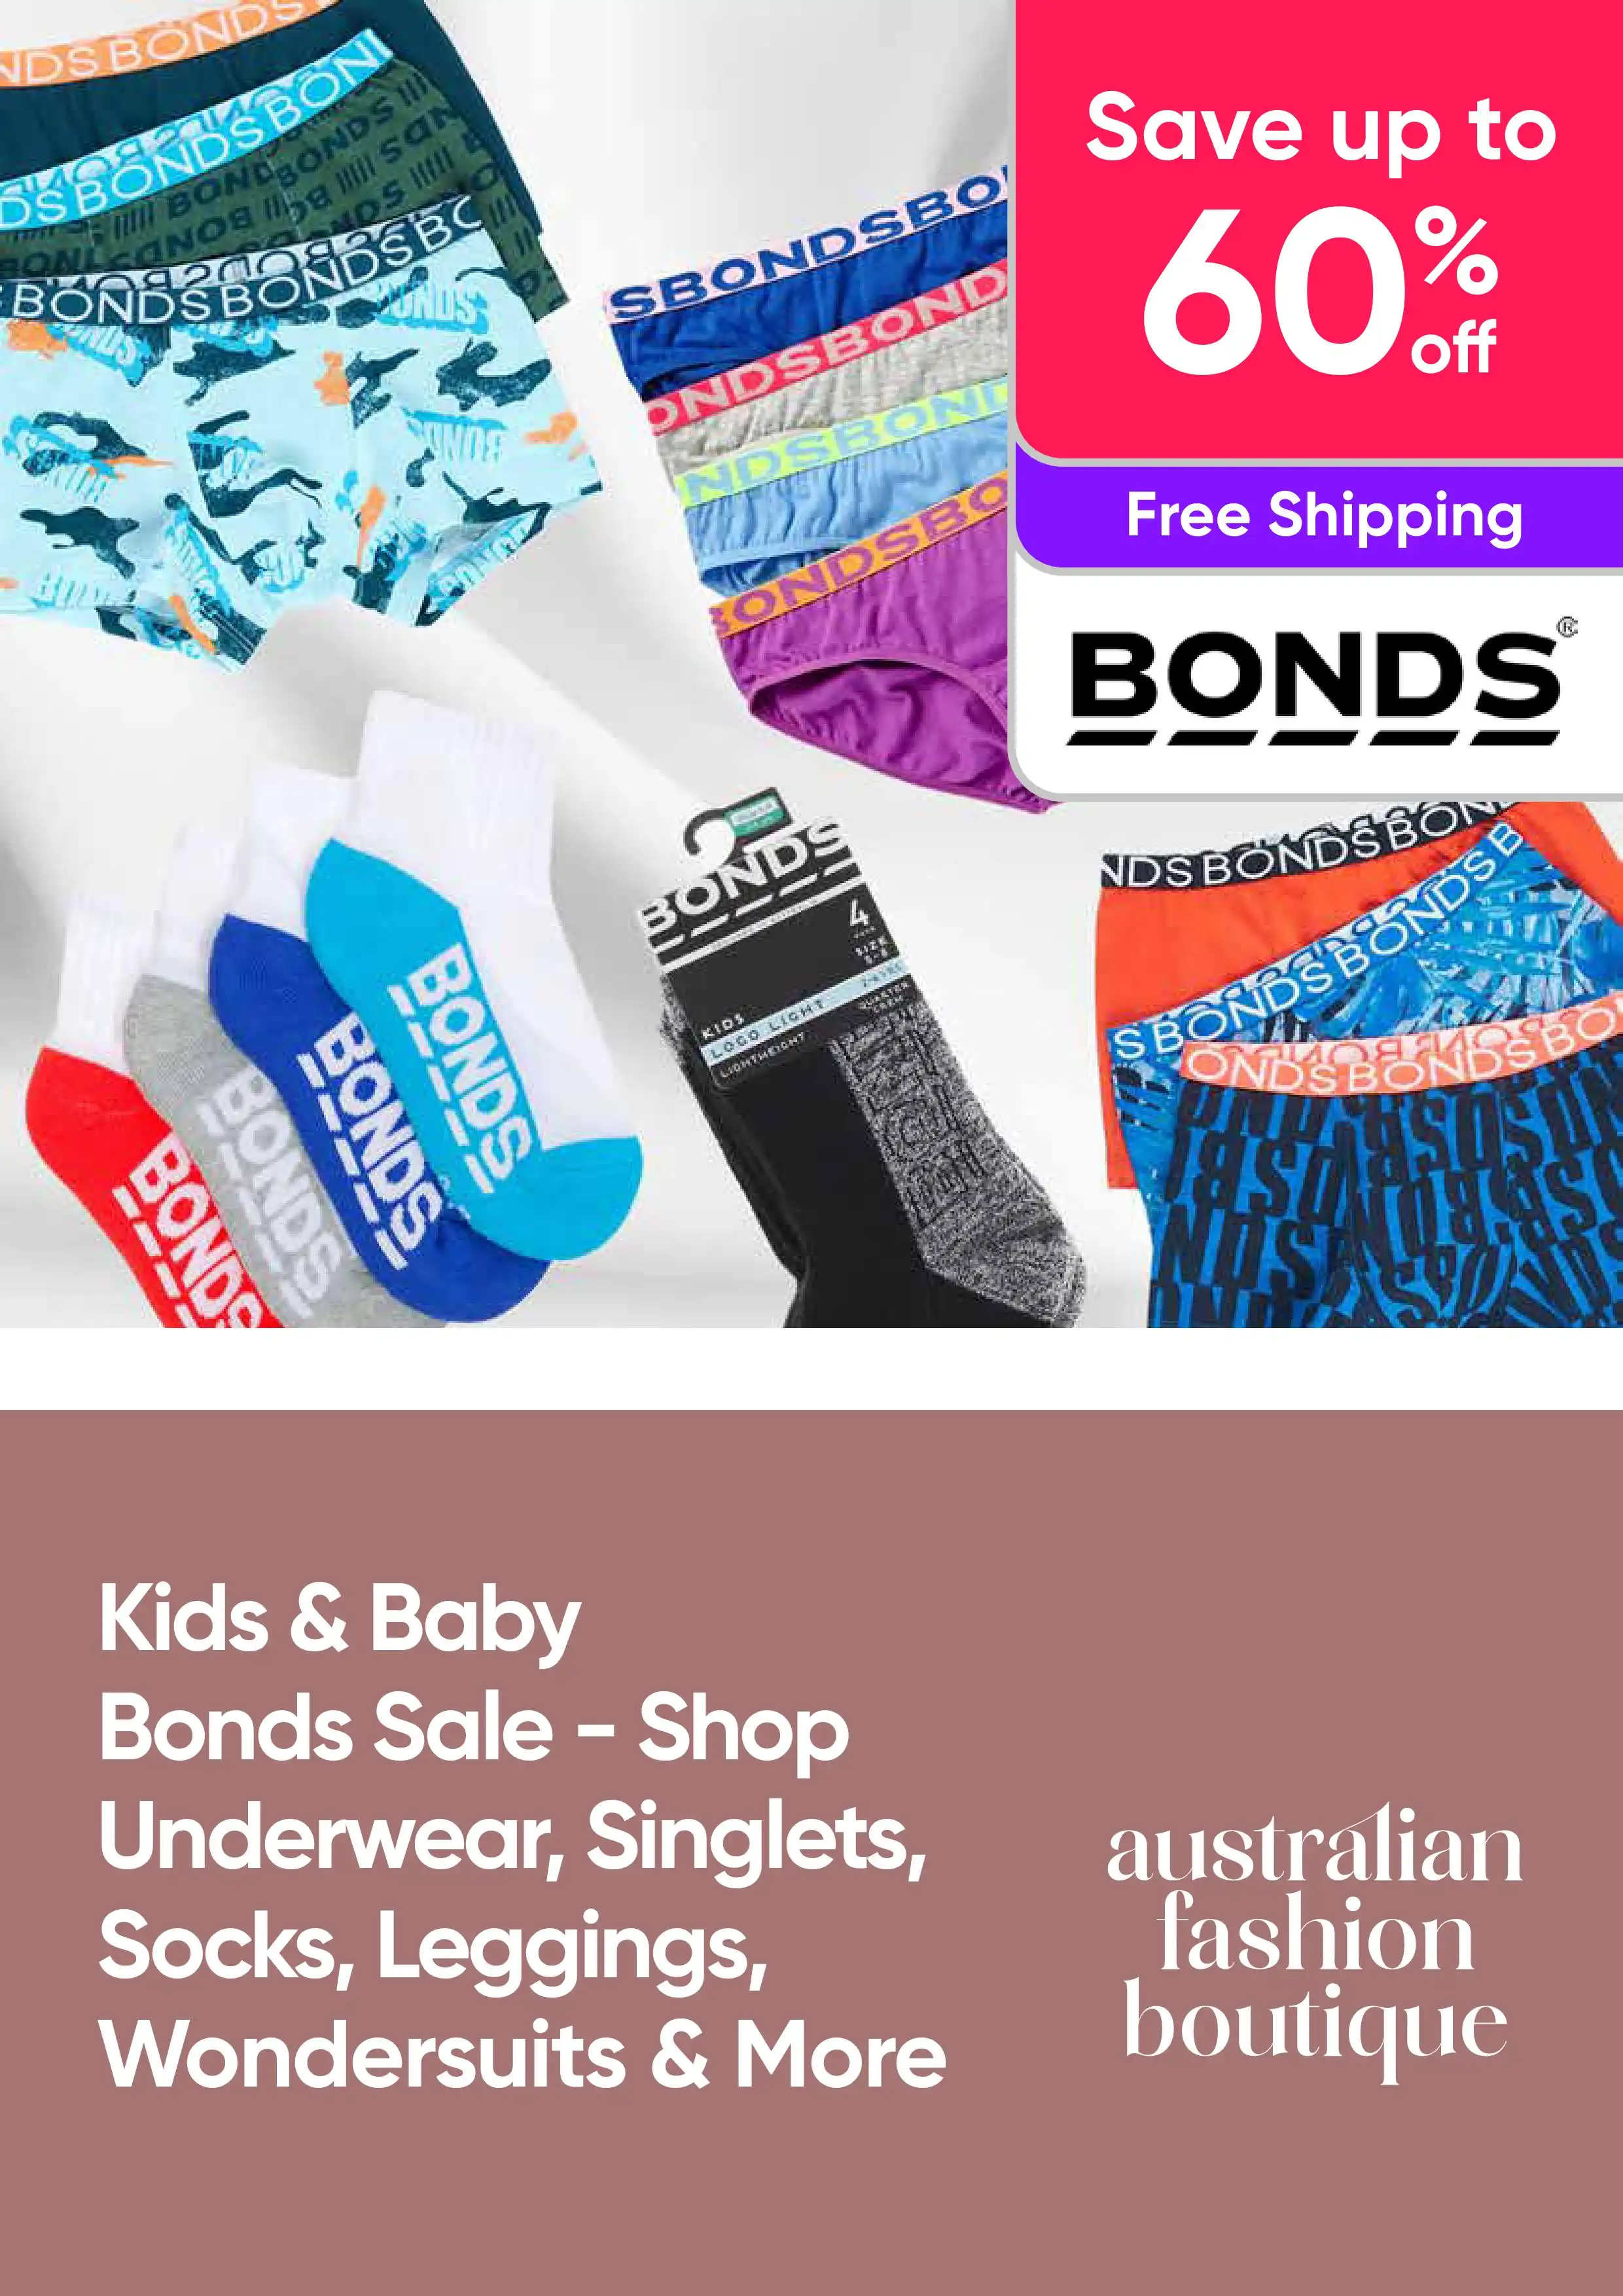 Kids & Baby Bonds Sale - Shop Underwear, Singlets, Socks, Leggings, Wondersuits & More